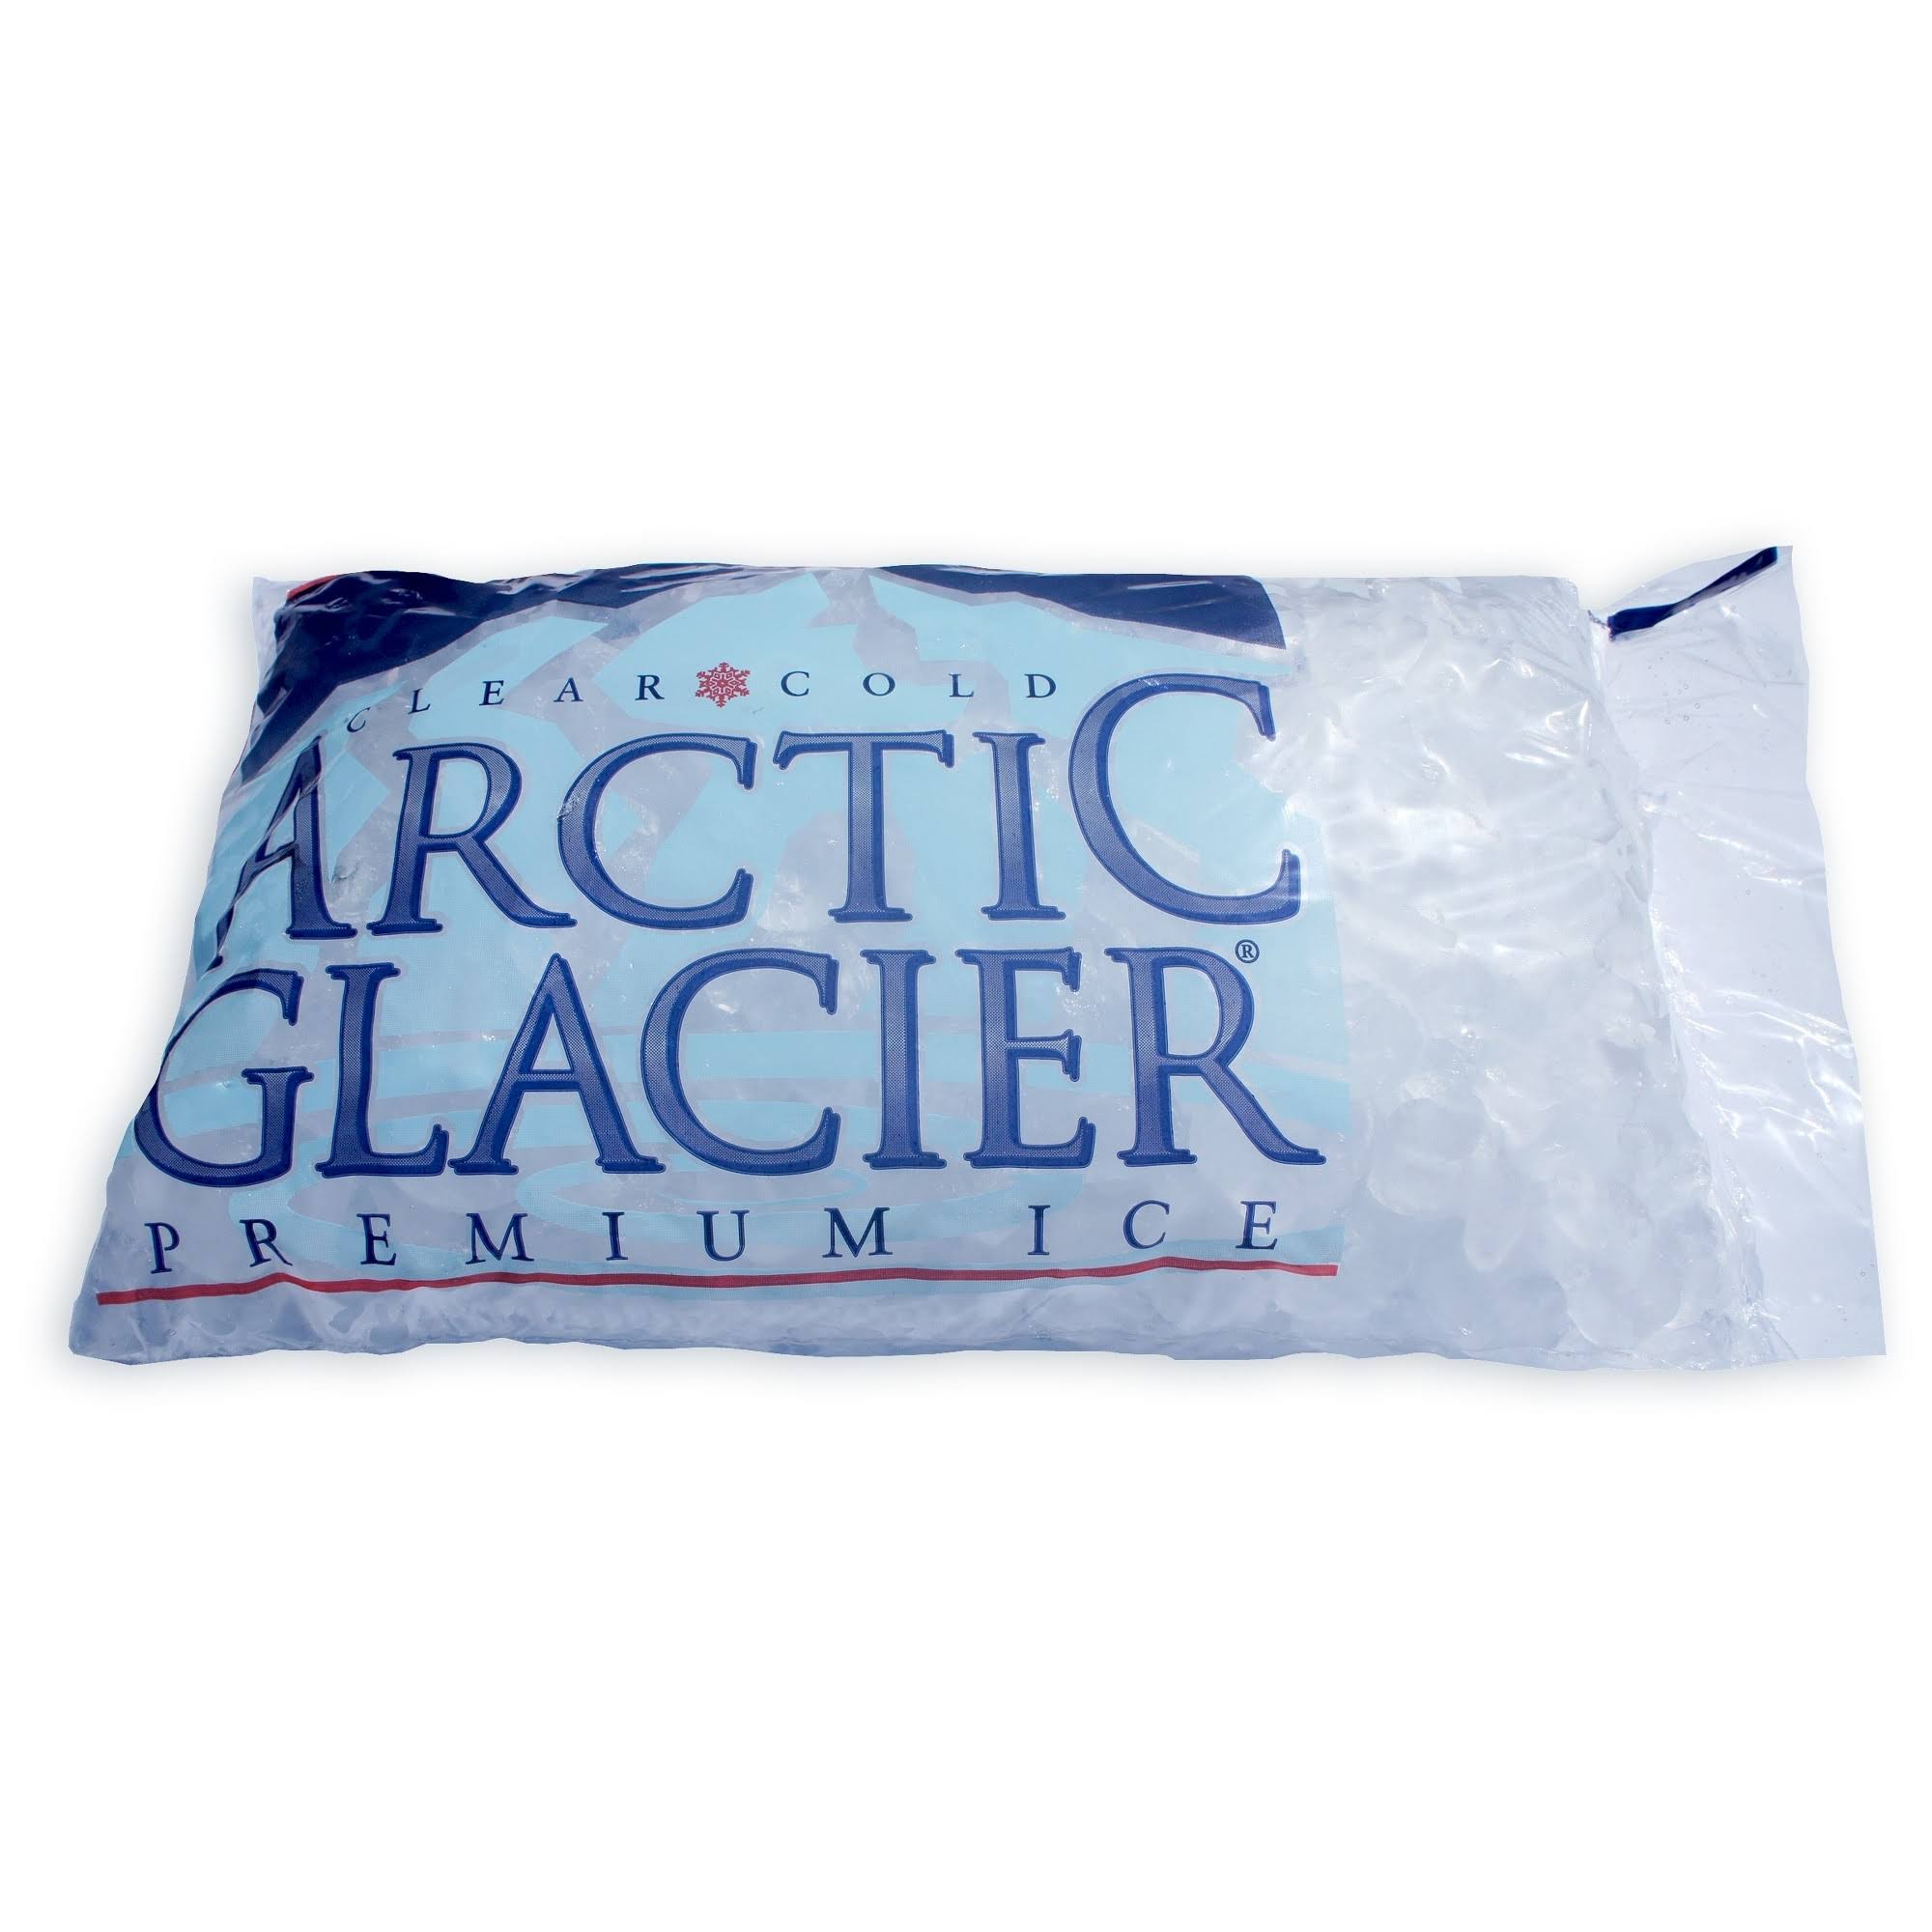 Arctic Glacier Premium Bagged Ice 16 lb